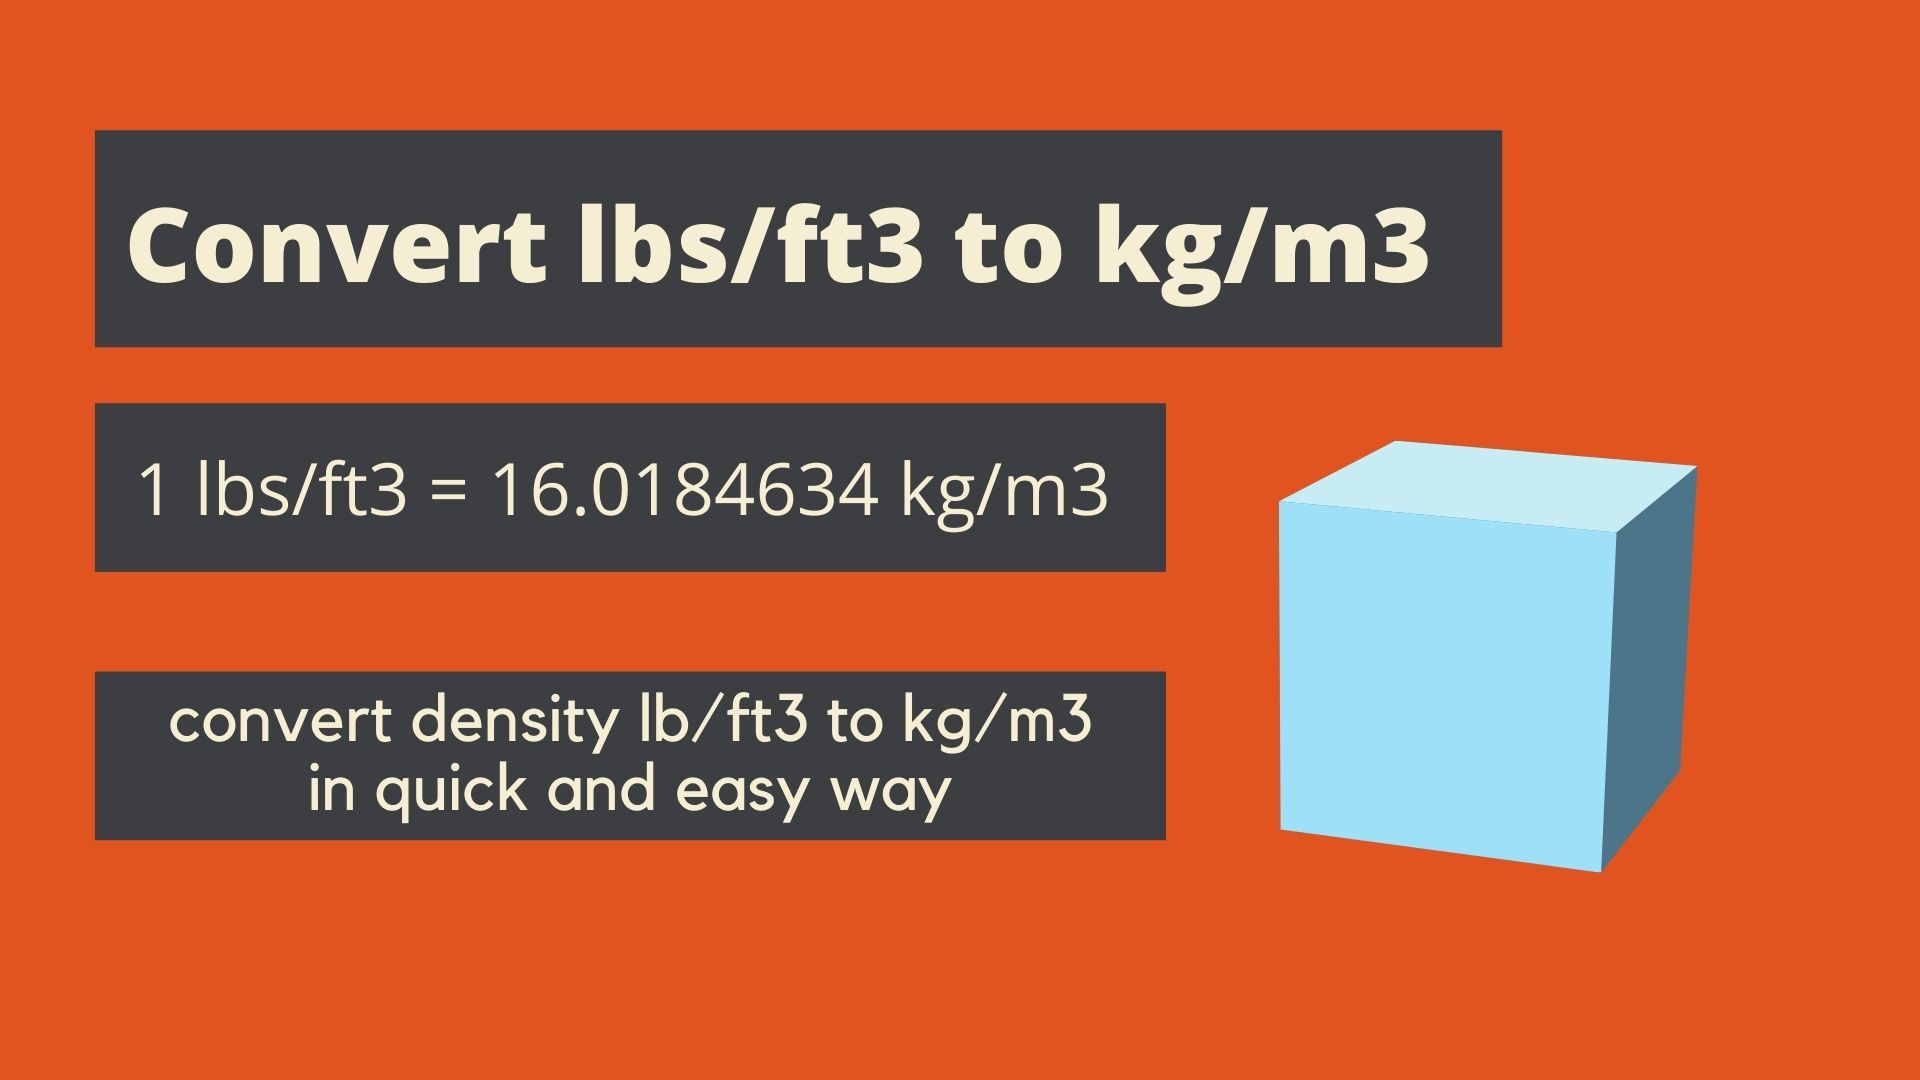 Lb/ft3 to kg/m3 converter